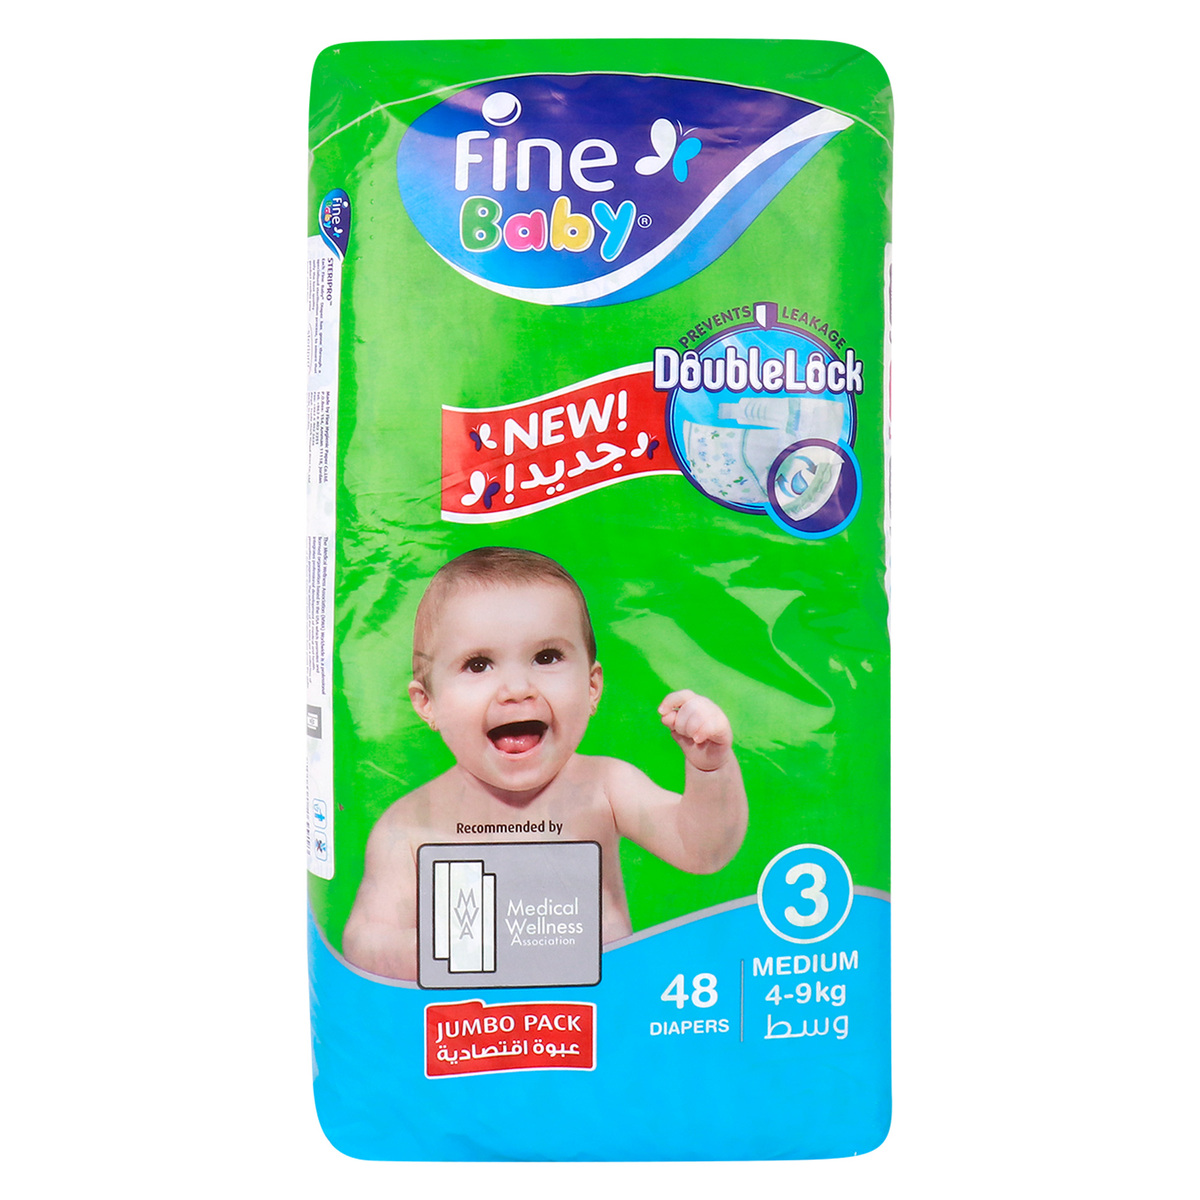 Fine Baby Diaper Size 3 Medium 4-9kg Jumbo Pack 48pcs